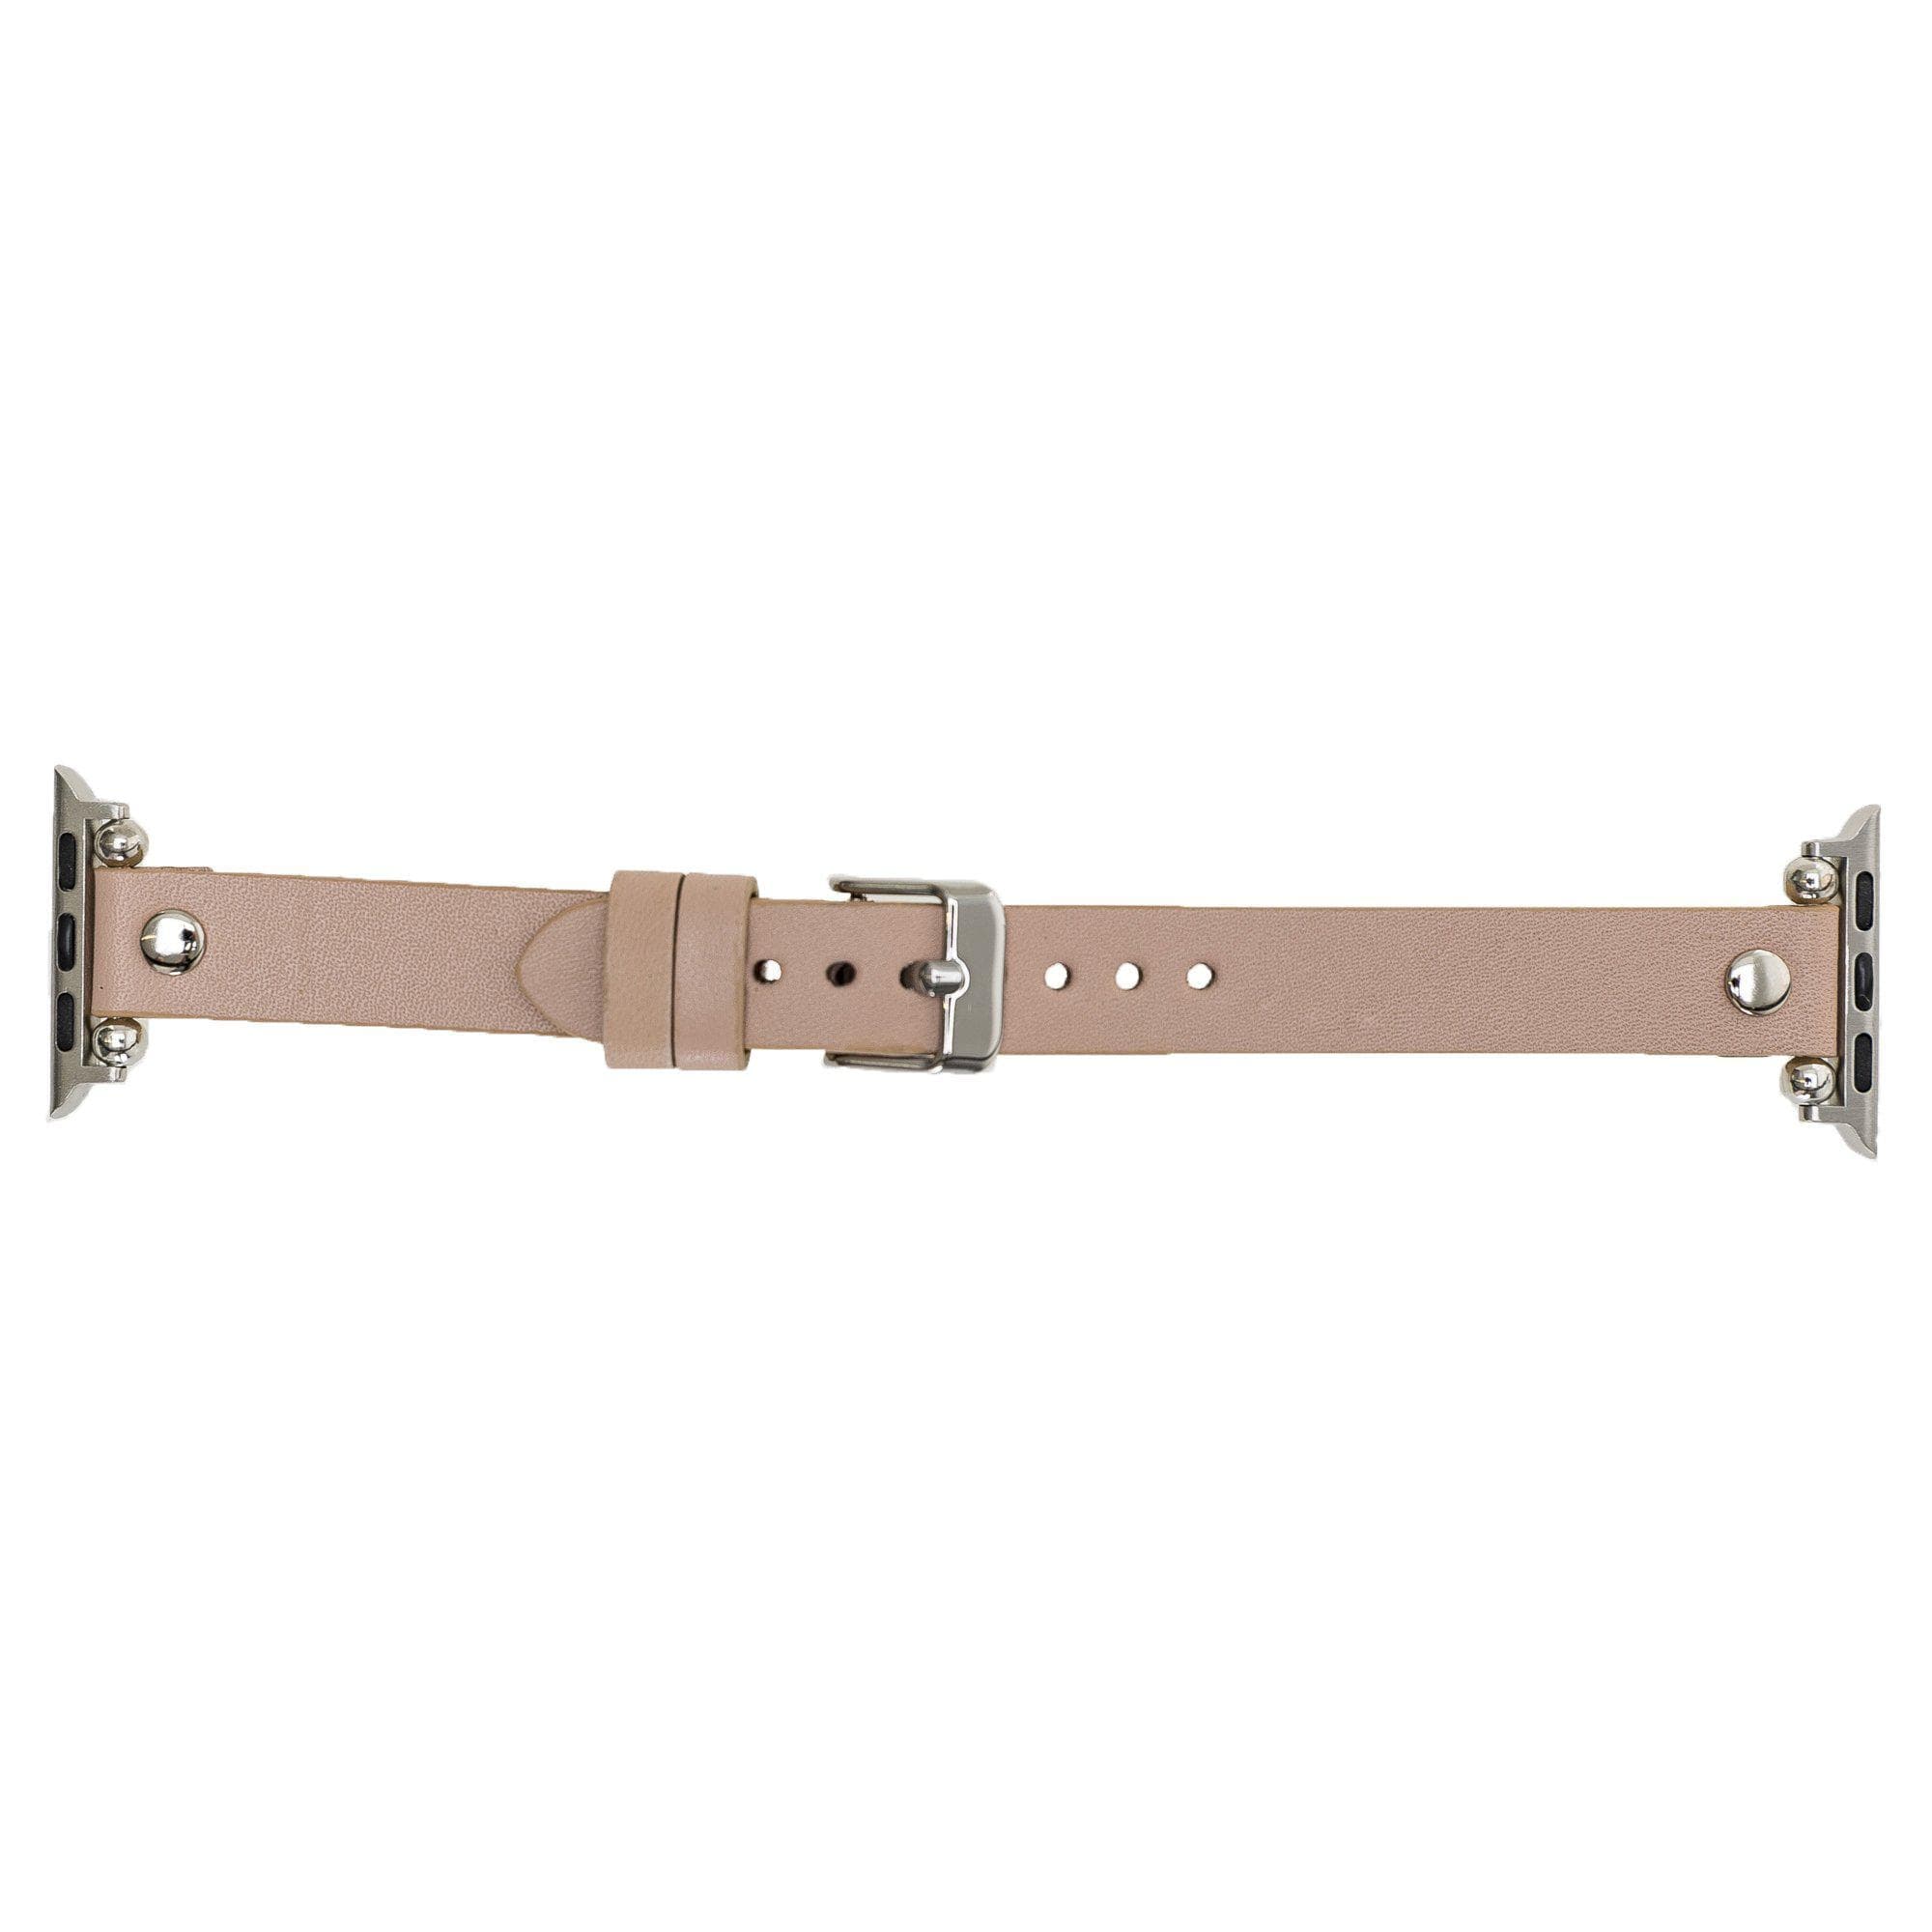 B2B - Leather Apple Watch Bands - Ferro Silver Trok Style Bouletta Shop